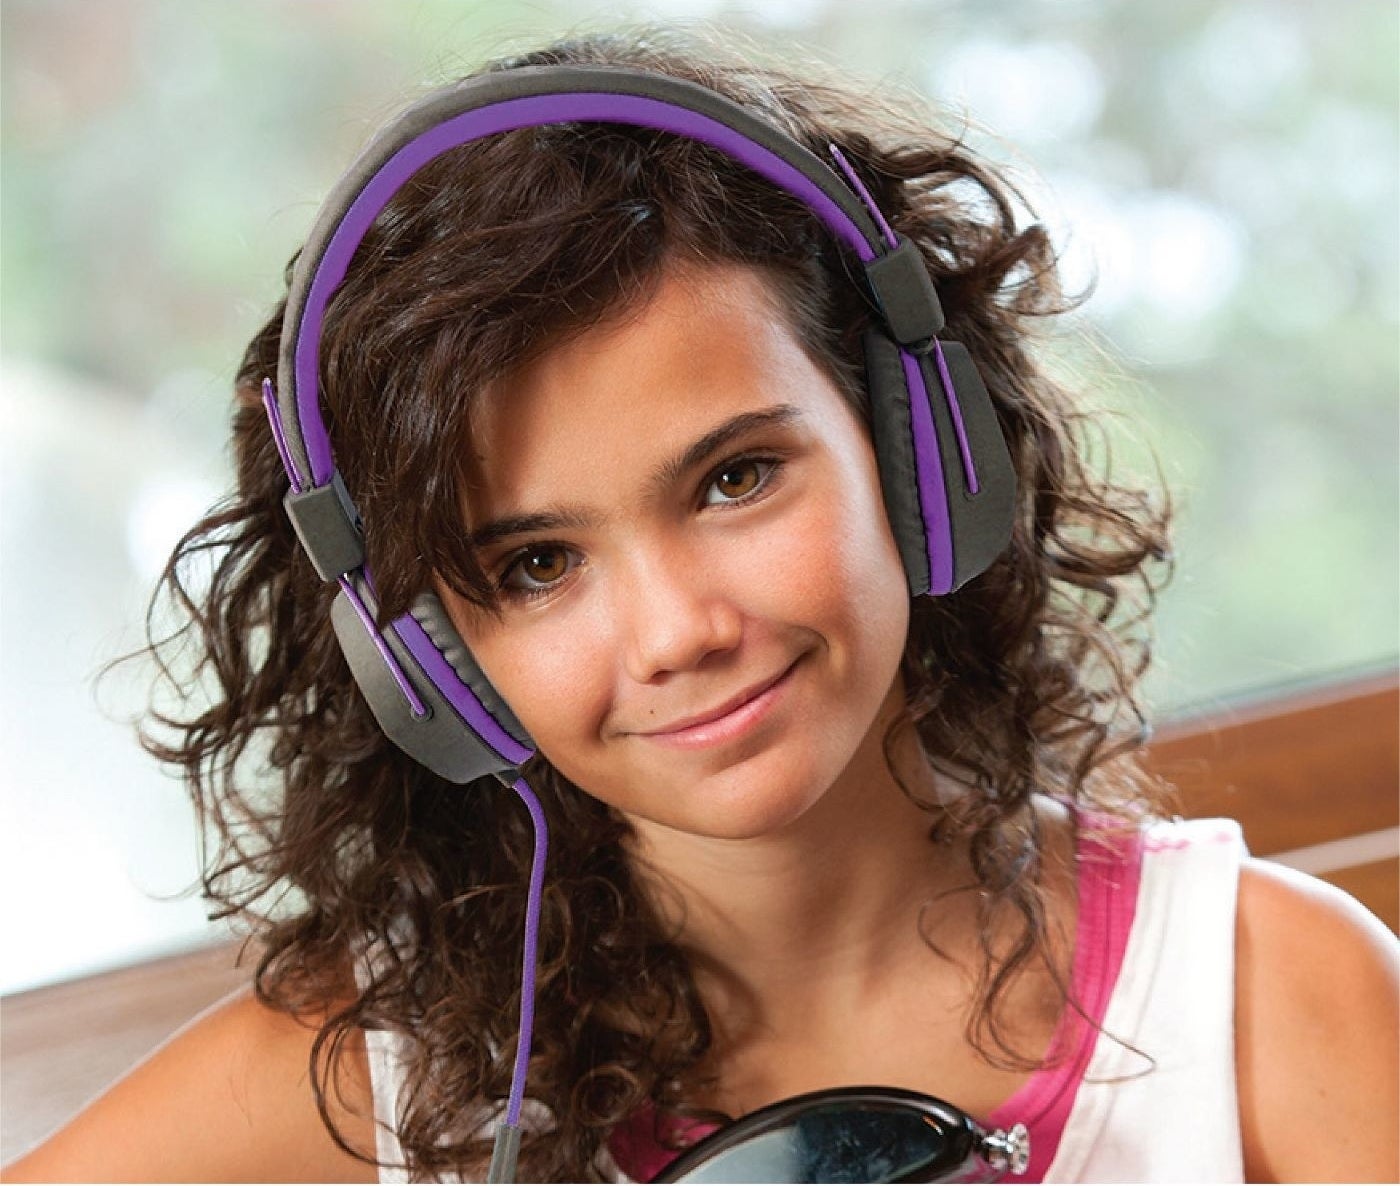 kid wearing purple and gray headphones